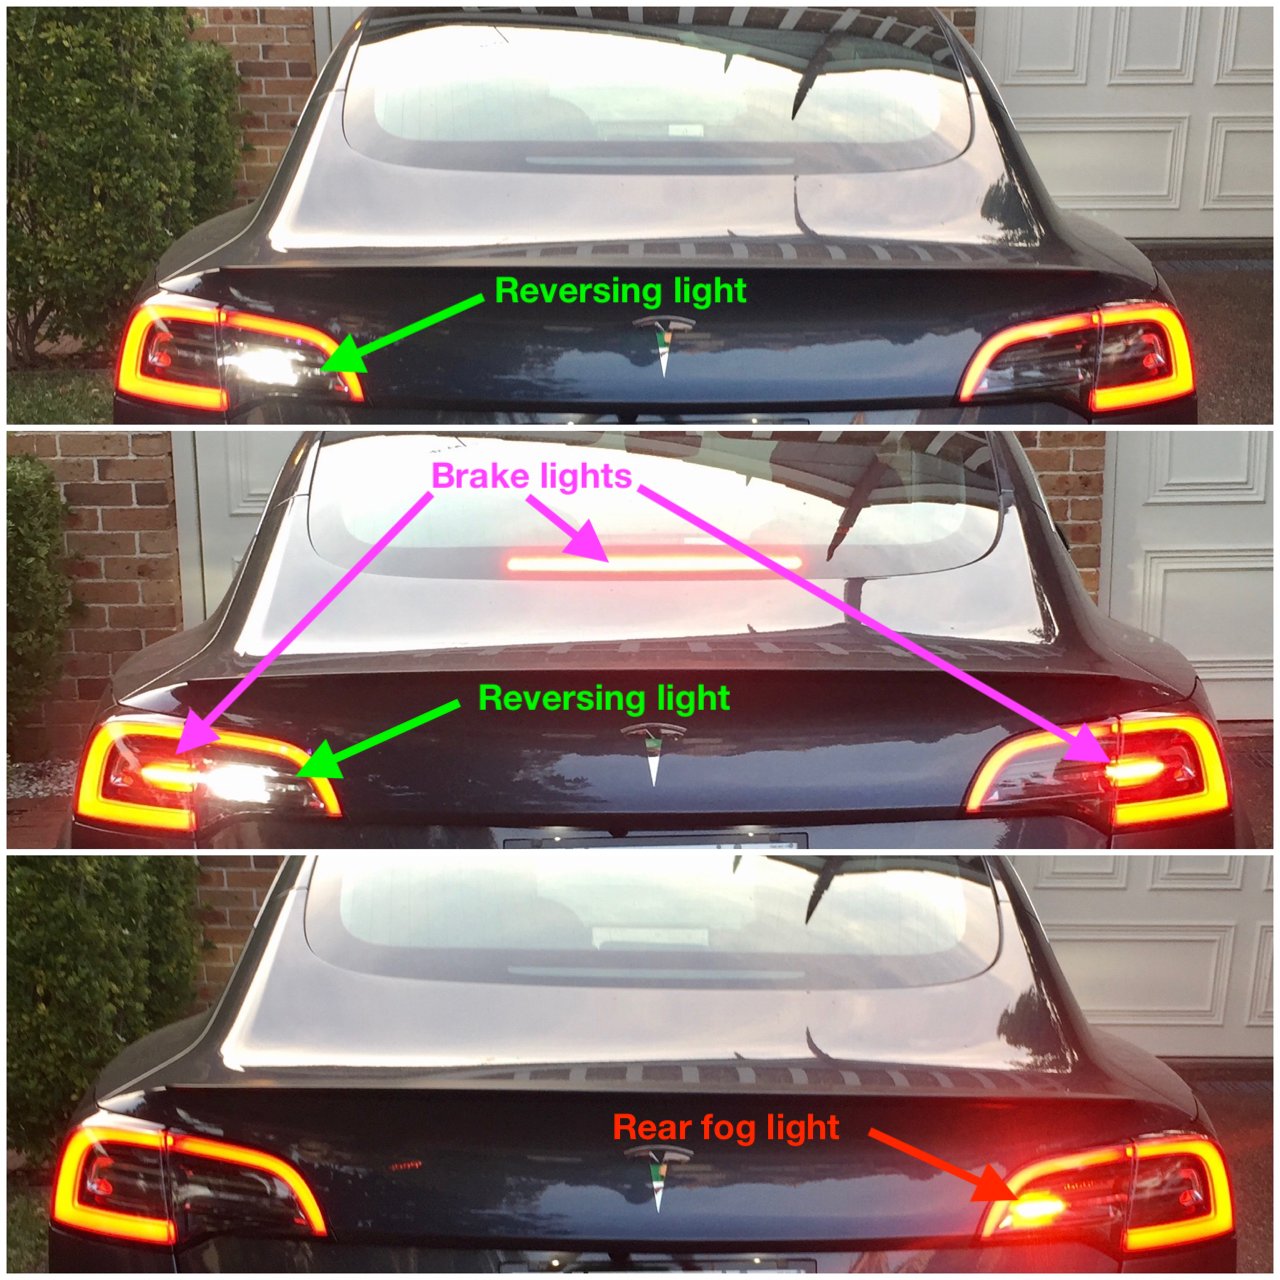 Reversing and rear fog lights on the Model 3 | Tesla Motors Club